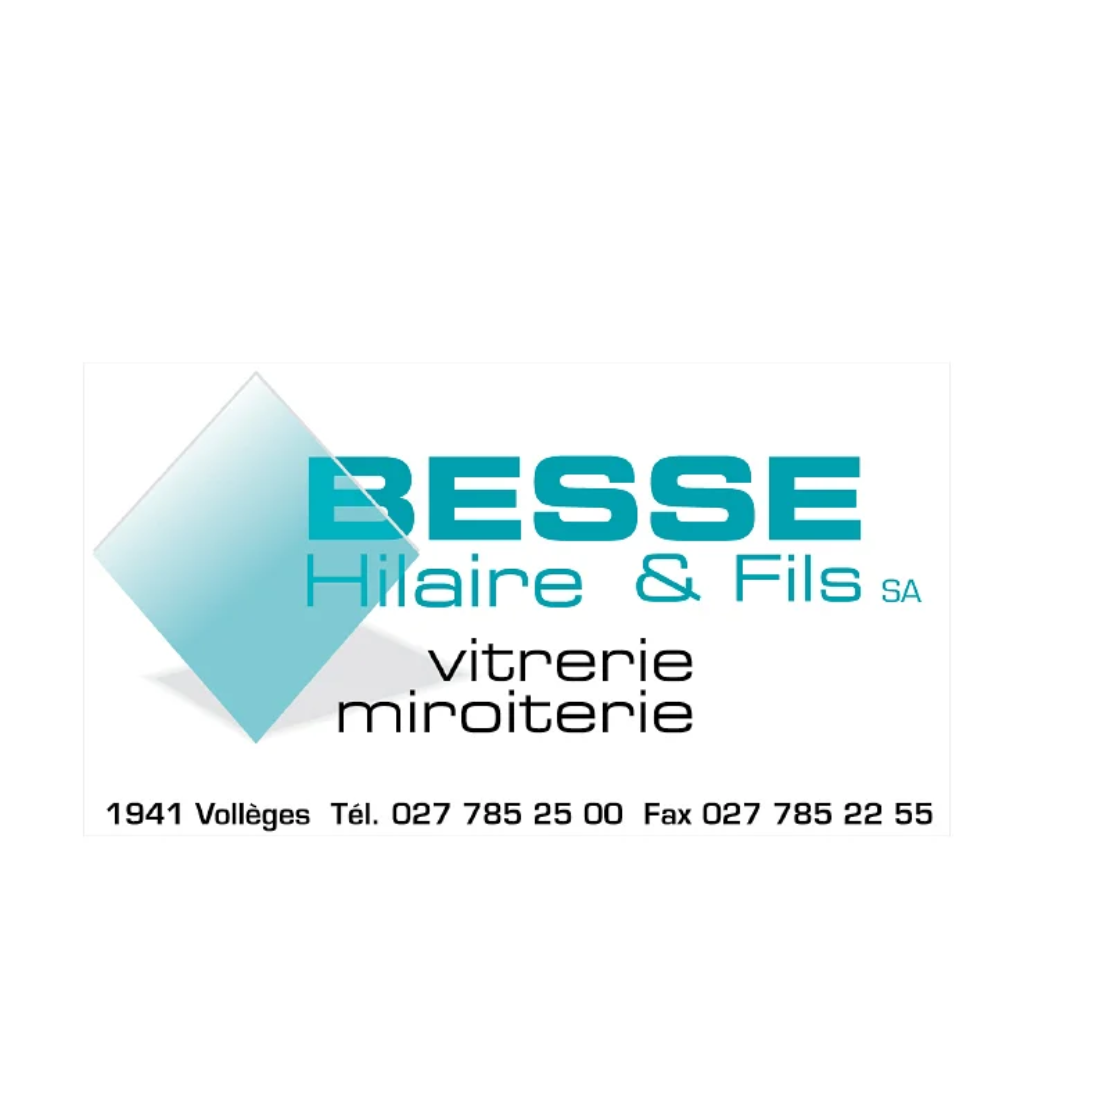 Besse Hilaire & fils SA Logo